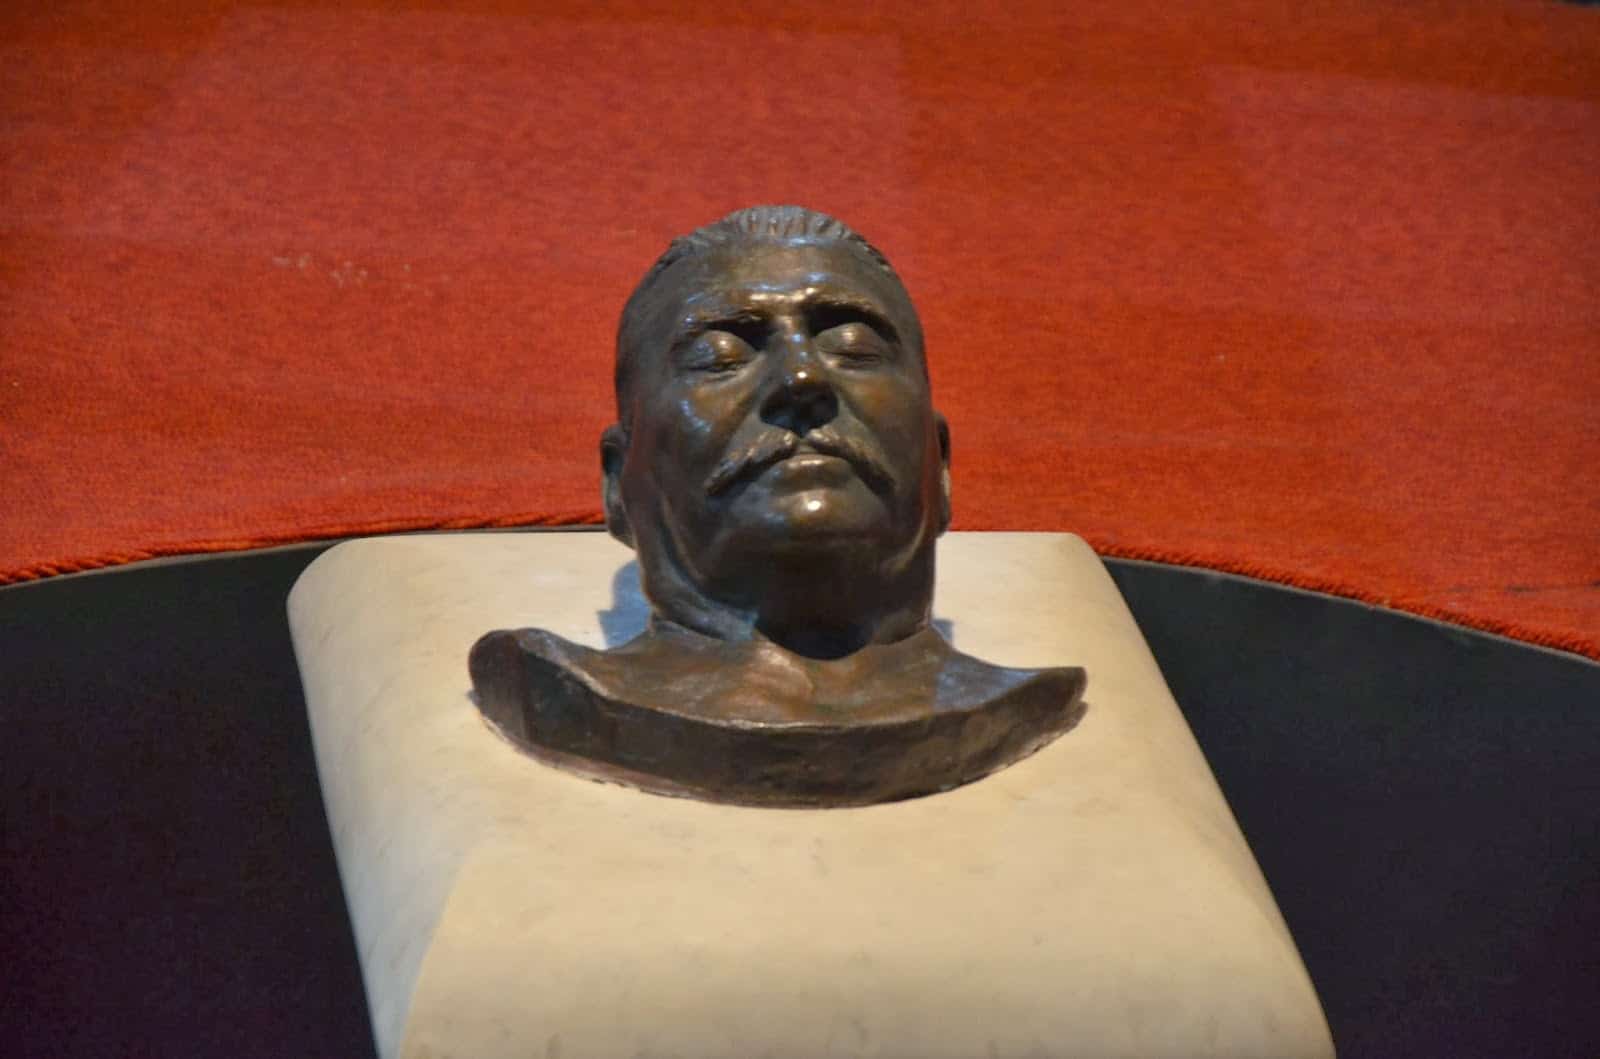 Stalin's death mask at the Joseph Stalin Museum in Gori, Georgia